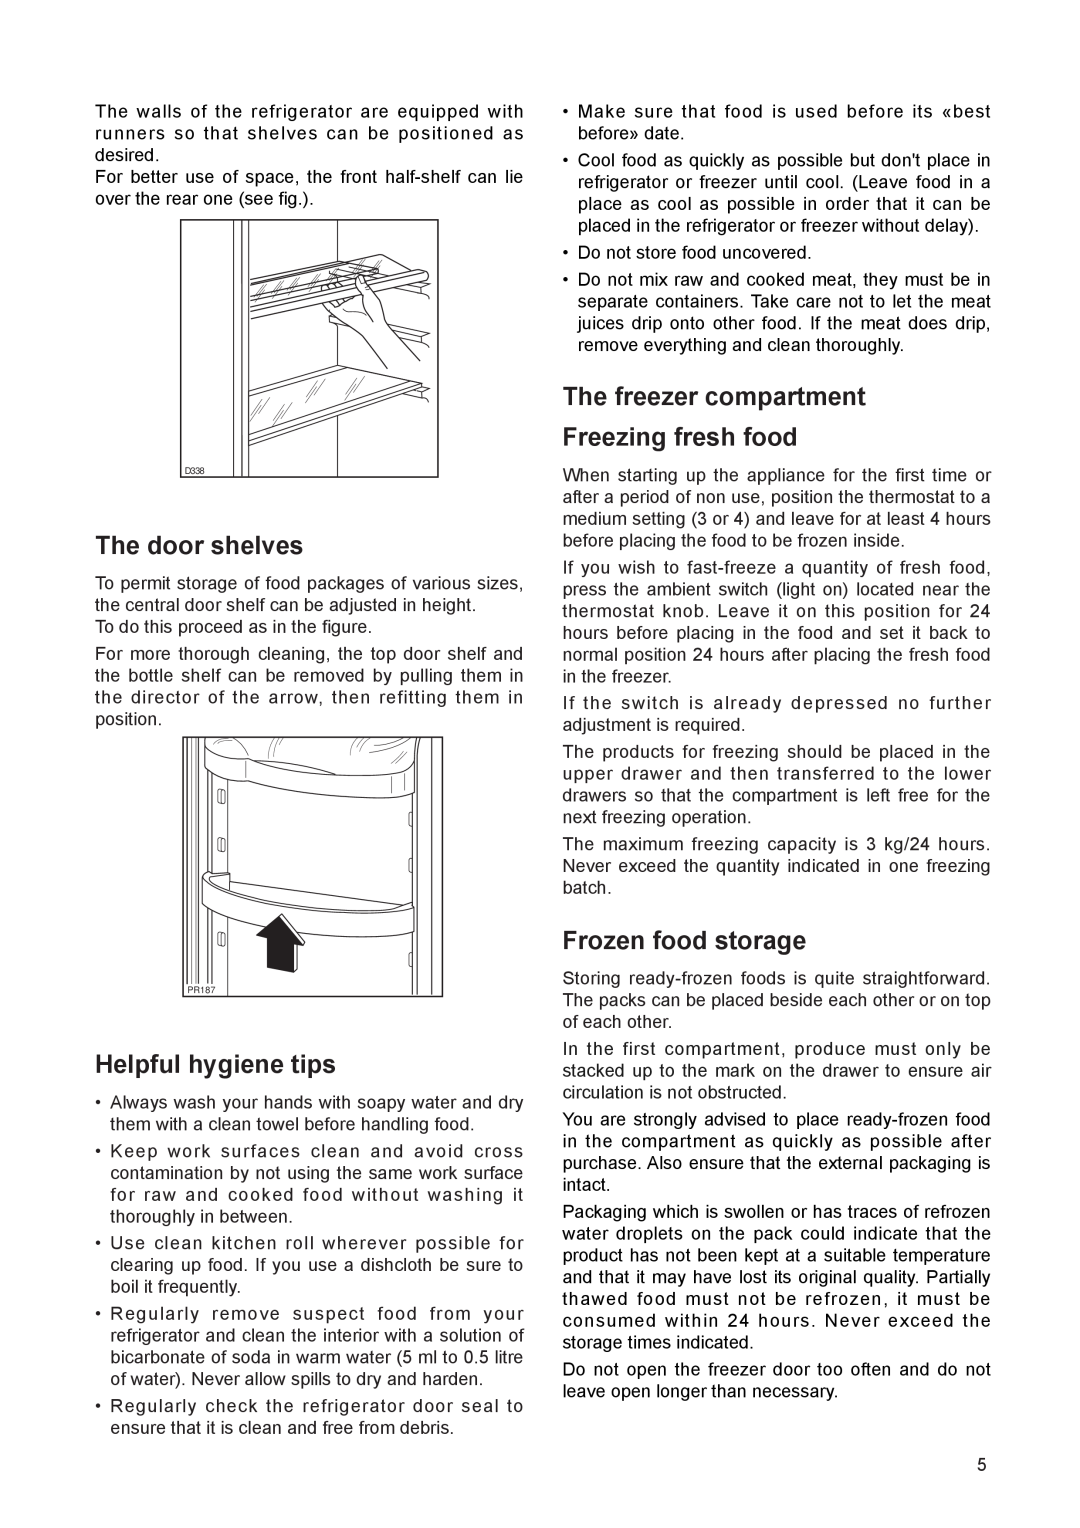 Zanussi ZSS 7/5 X The door shelves, Helpful hygiene tips, The freezer compartment Freezing fresh food, Frozen food storage 